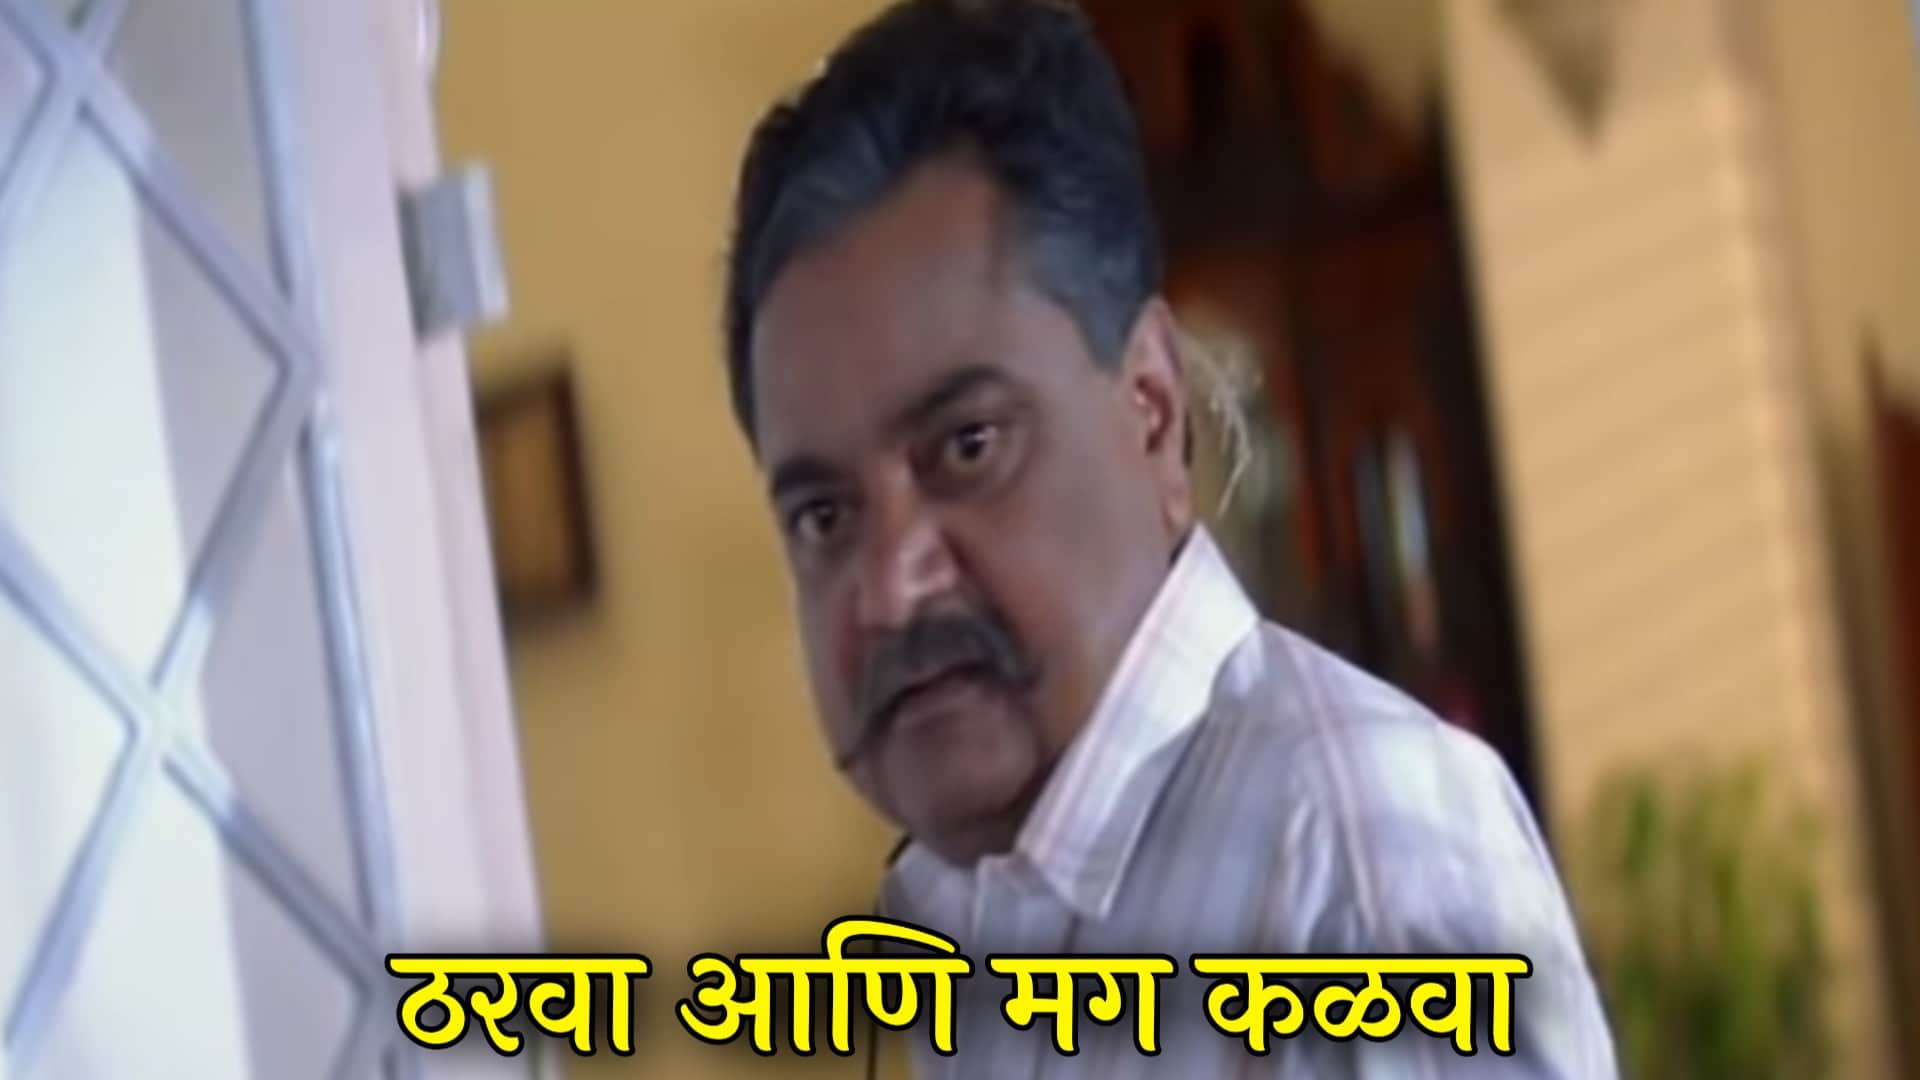 Jatra Marathi Movie Meme Templates